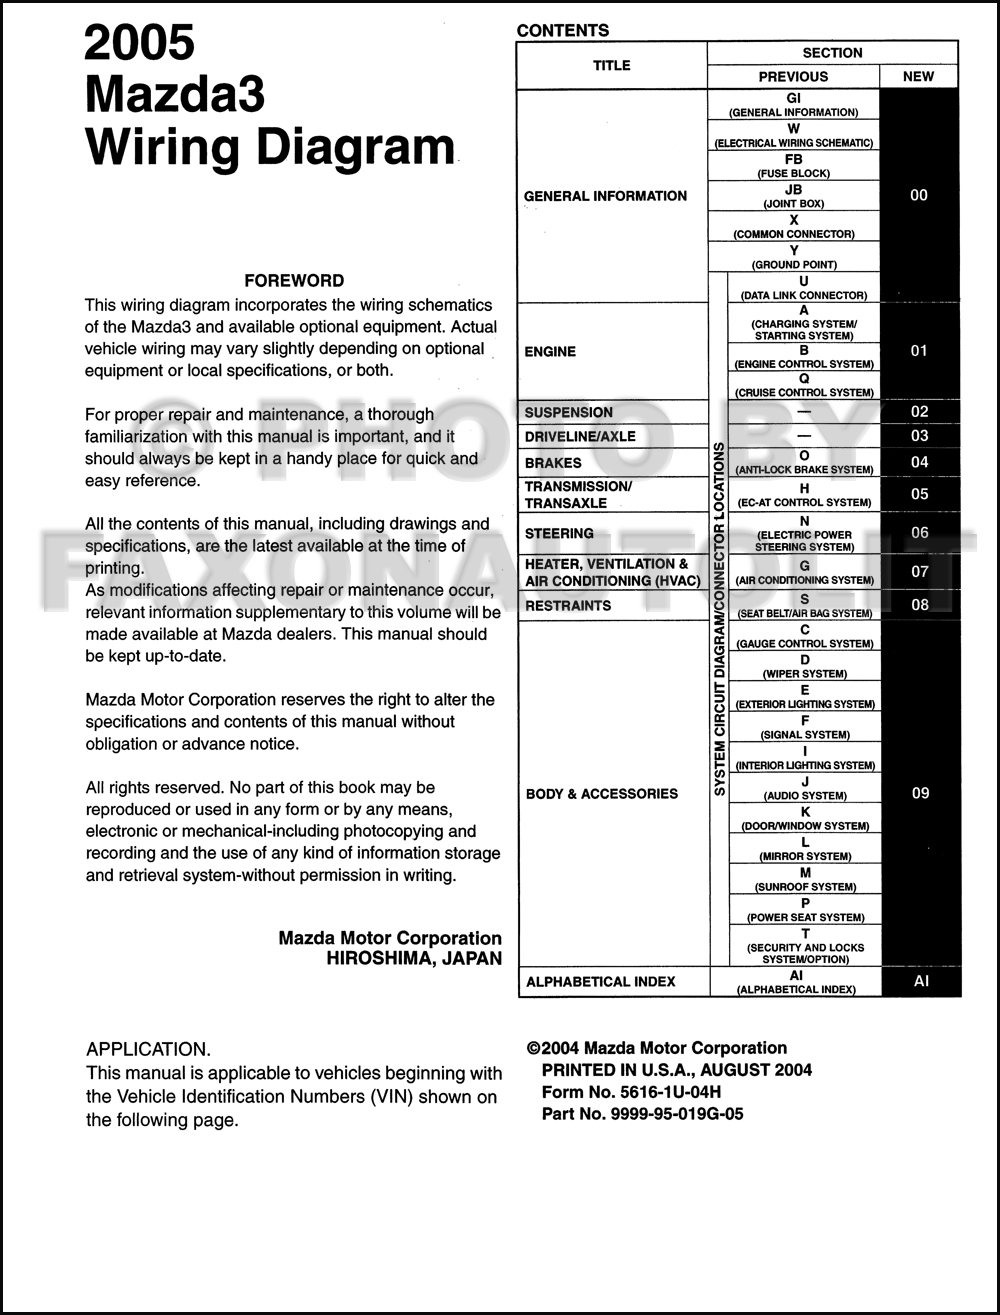 Mazda 3 Wiring Schematic Download - yellowsyn